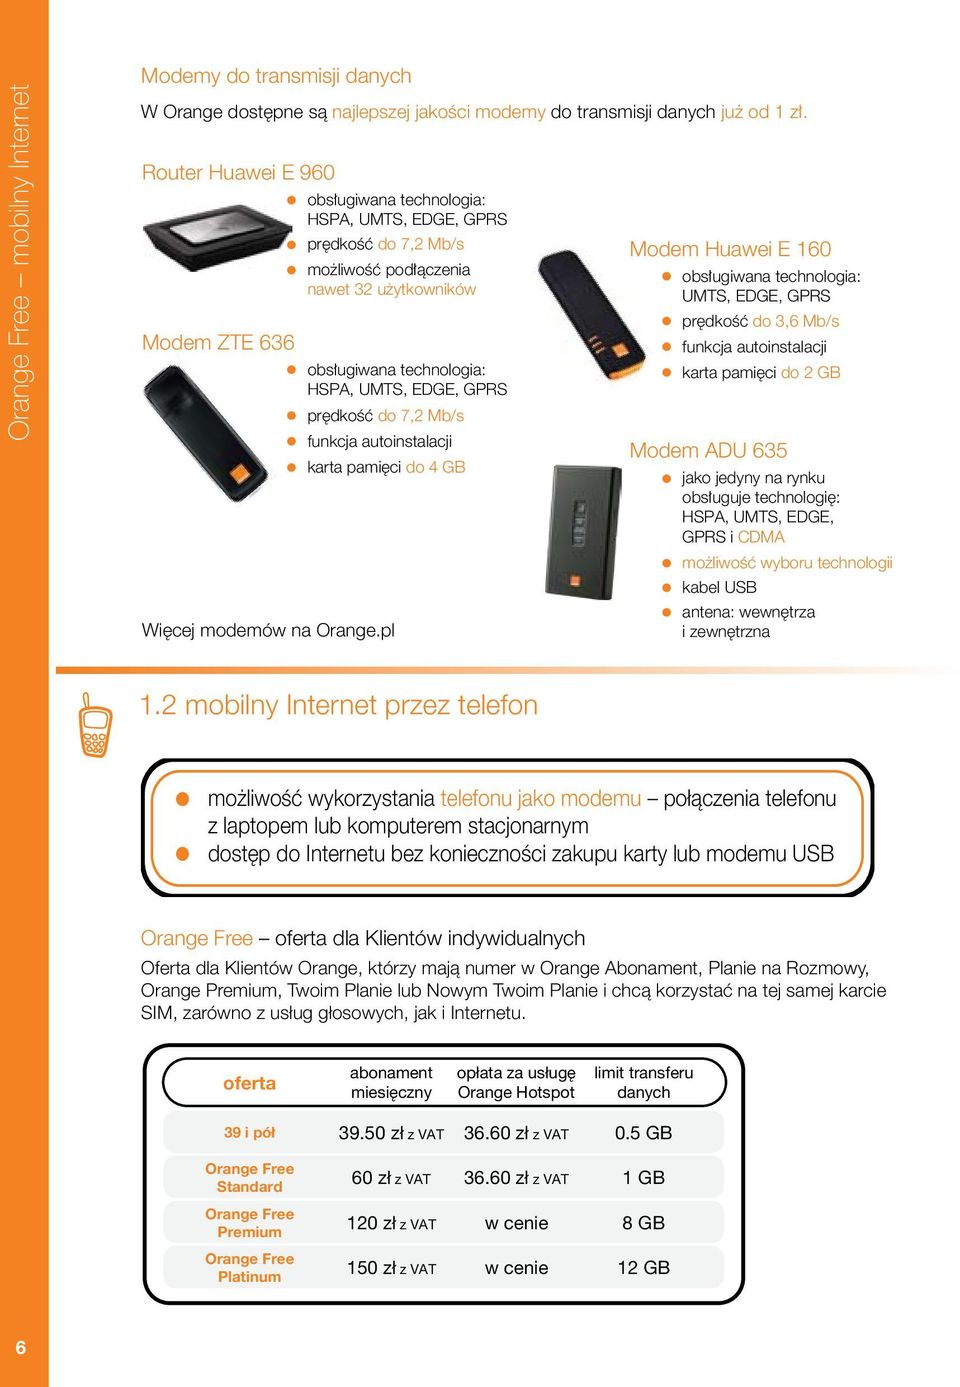 funkcja autoinstalacji karta pami ci do 4 GB Modem Huawei E 160 obs ugiwana technologia: UMTS, EDGE, GPRS pr dkoêç do 3,6 Mb/s funkcja autoinstalacji karta pami ci do 2 GB Modem ADU 635 jako jedyny